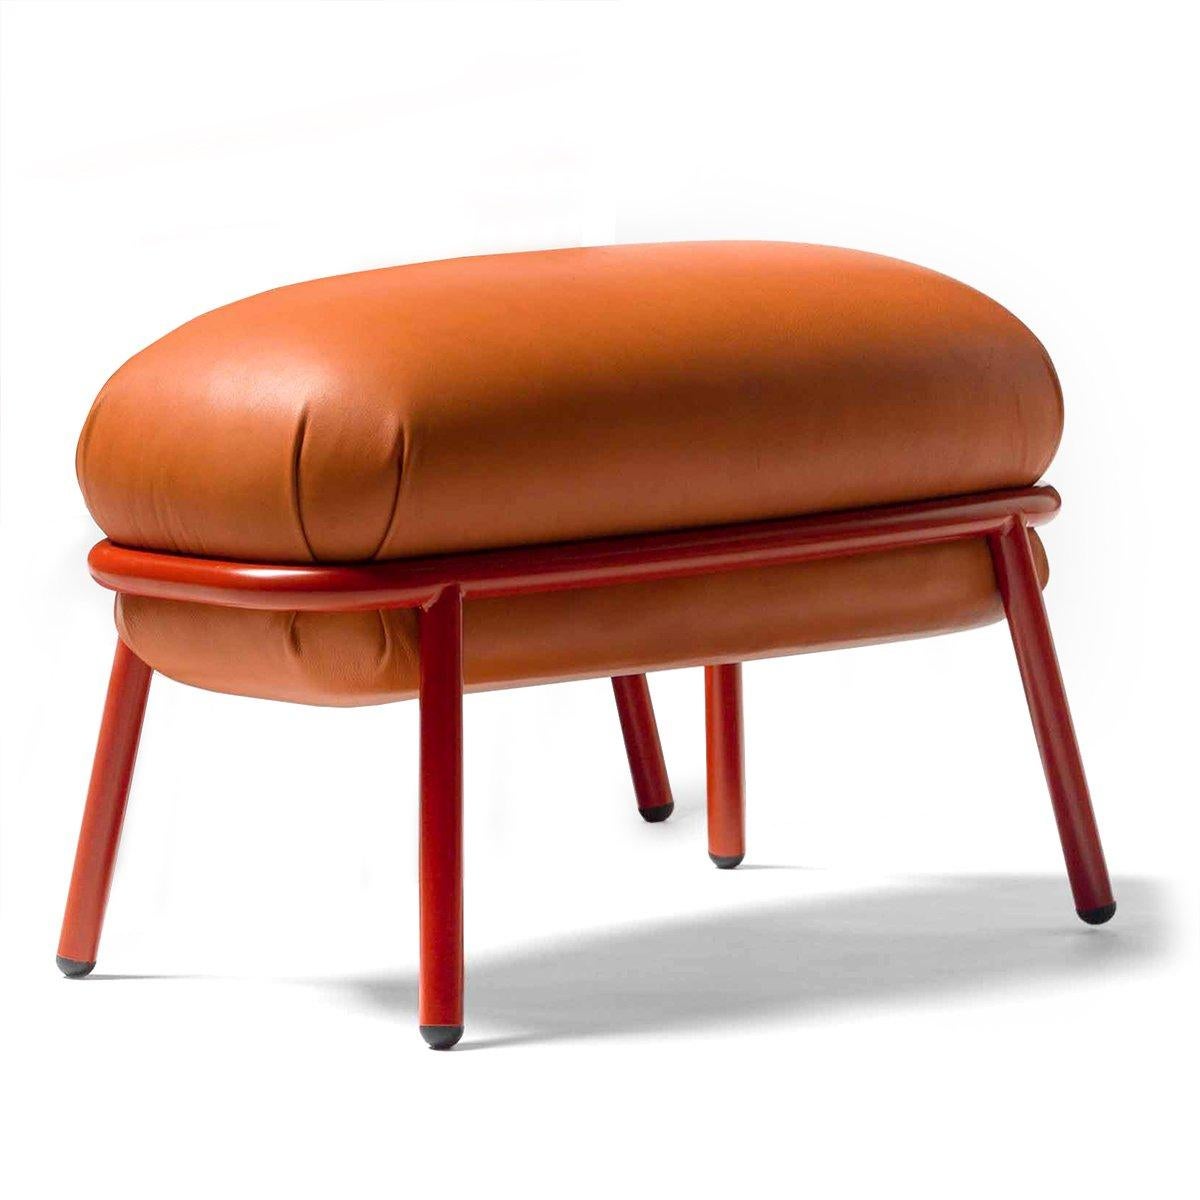 The Grasso footstool, designed by Stephen Burks for BD Barcelona design,

Measures: Foot stool 36 cm D x 75 cm W x 40 cm H.